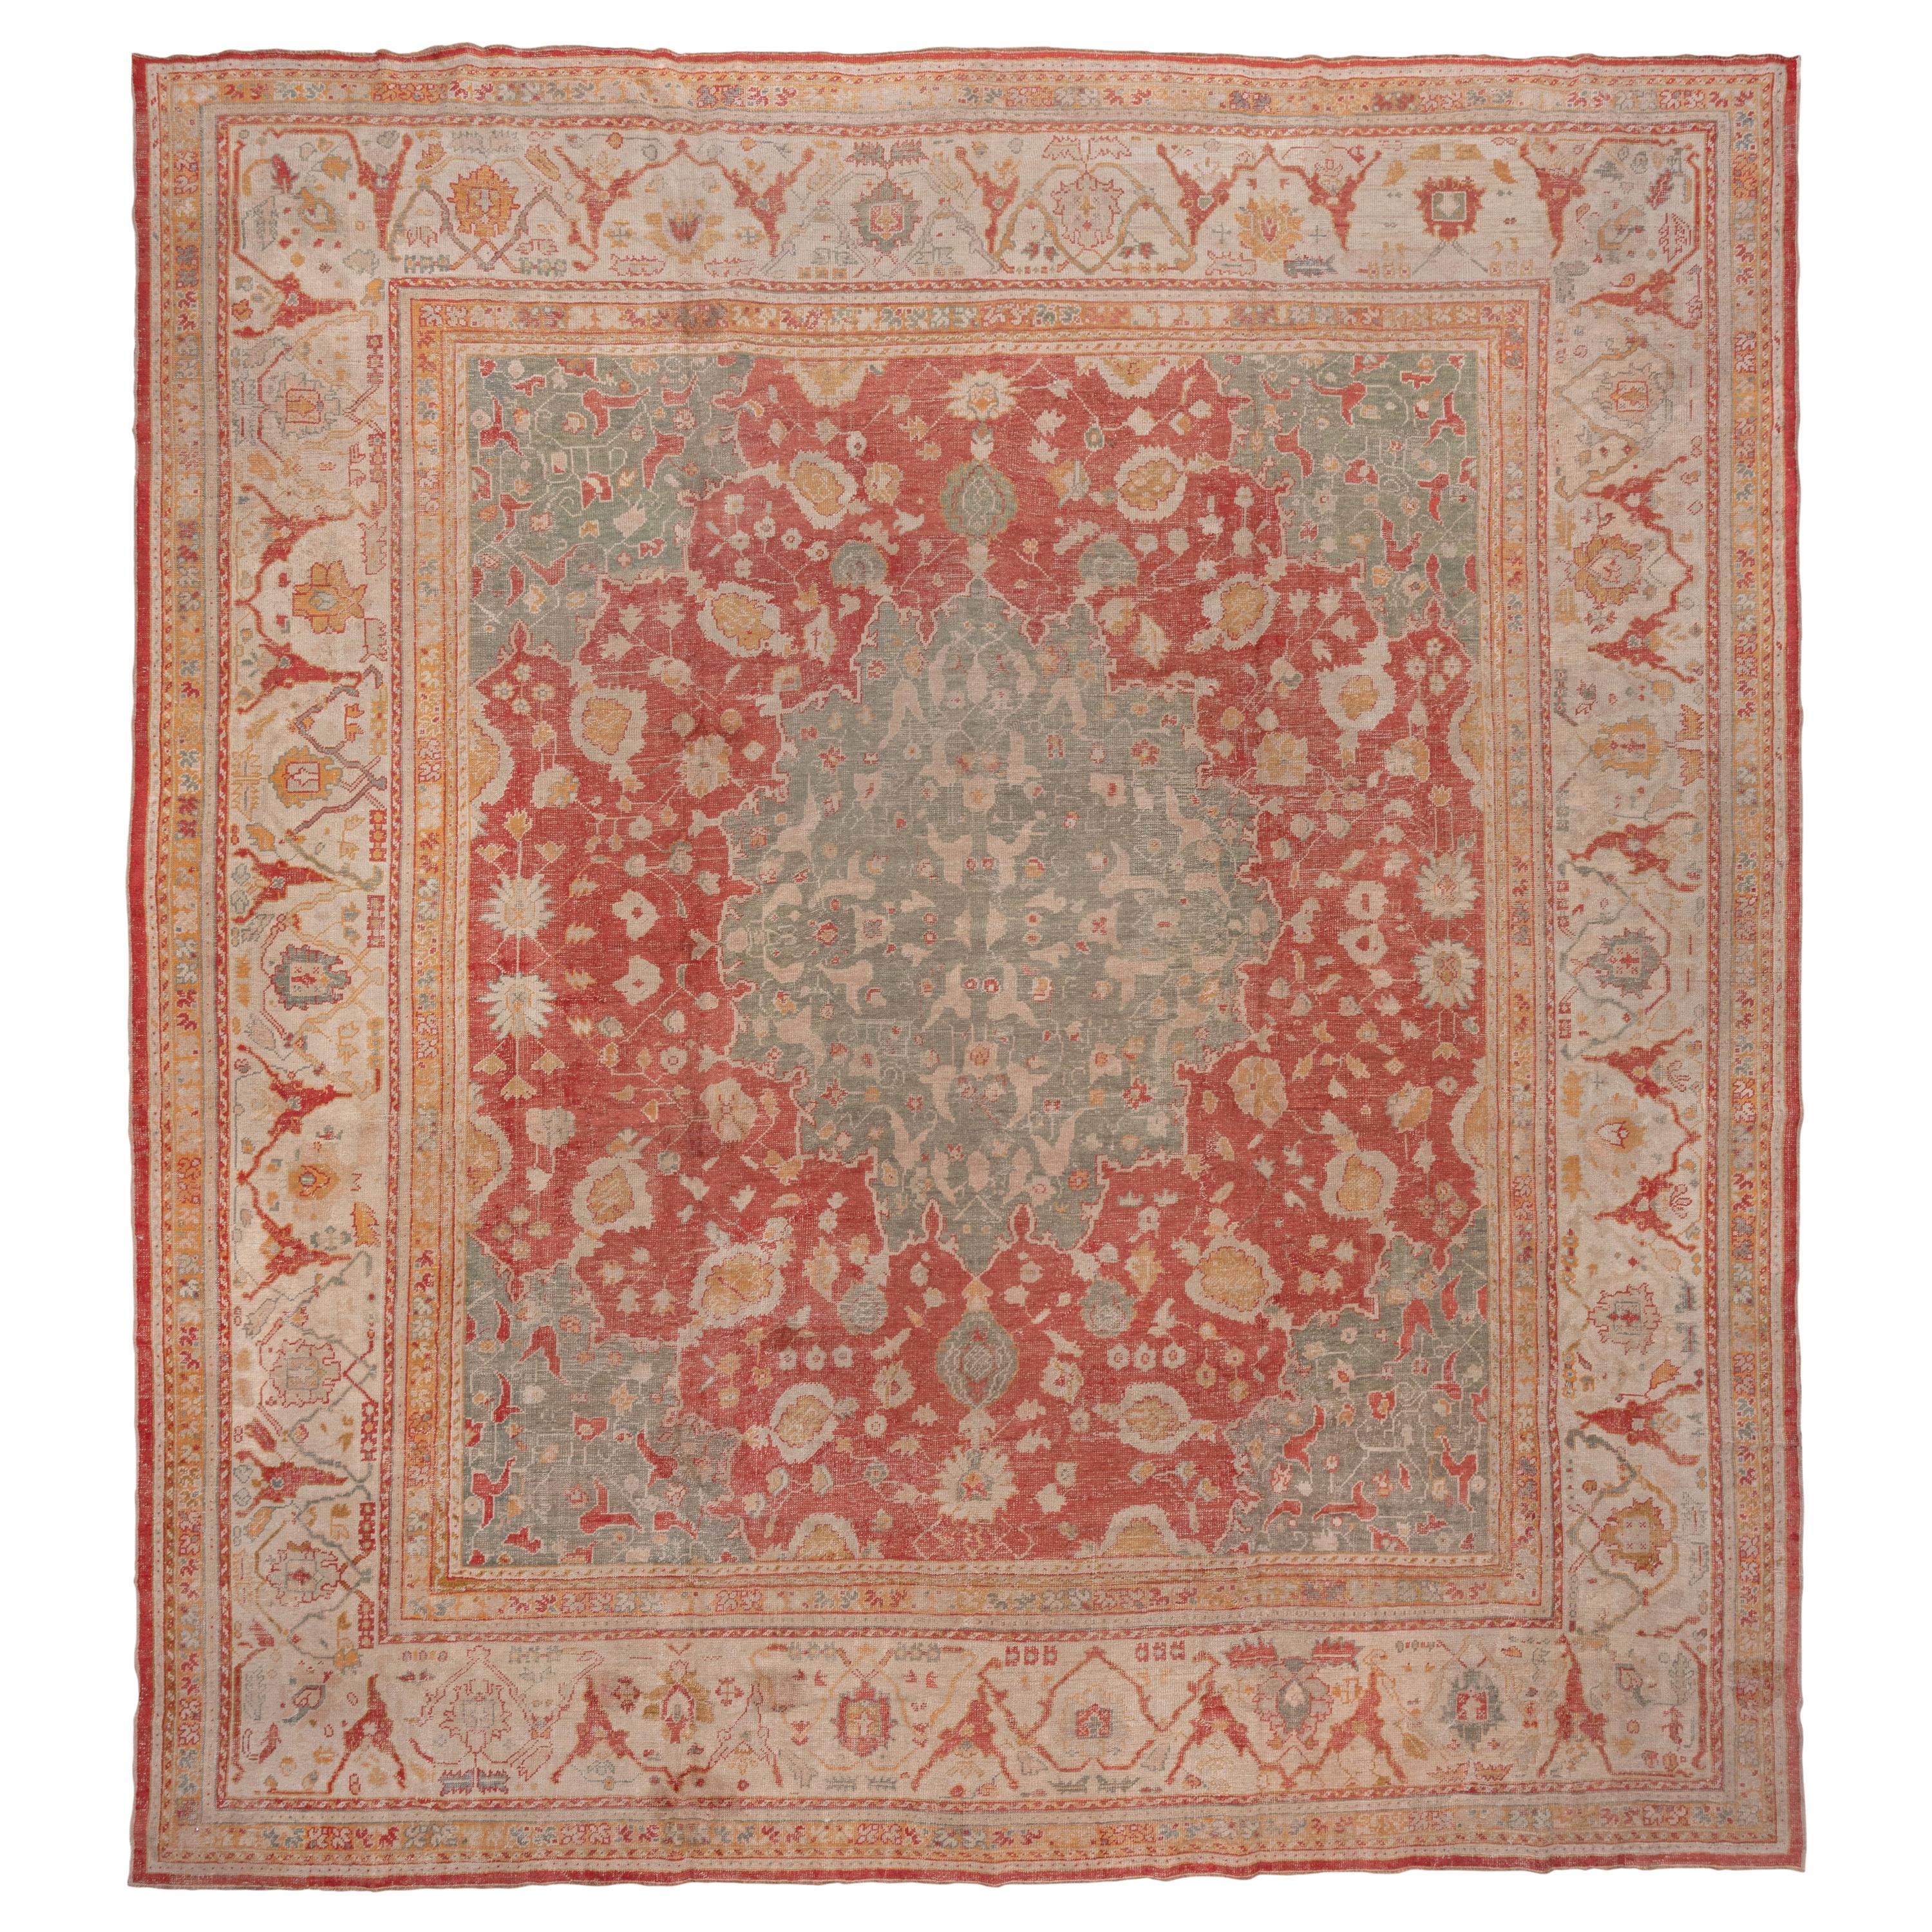 Antique Turkish Oushak Carpet, circa 1920s